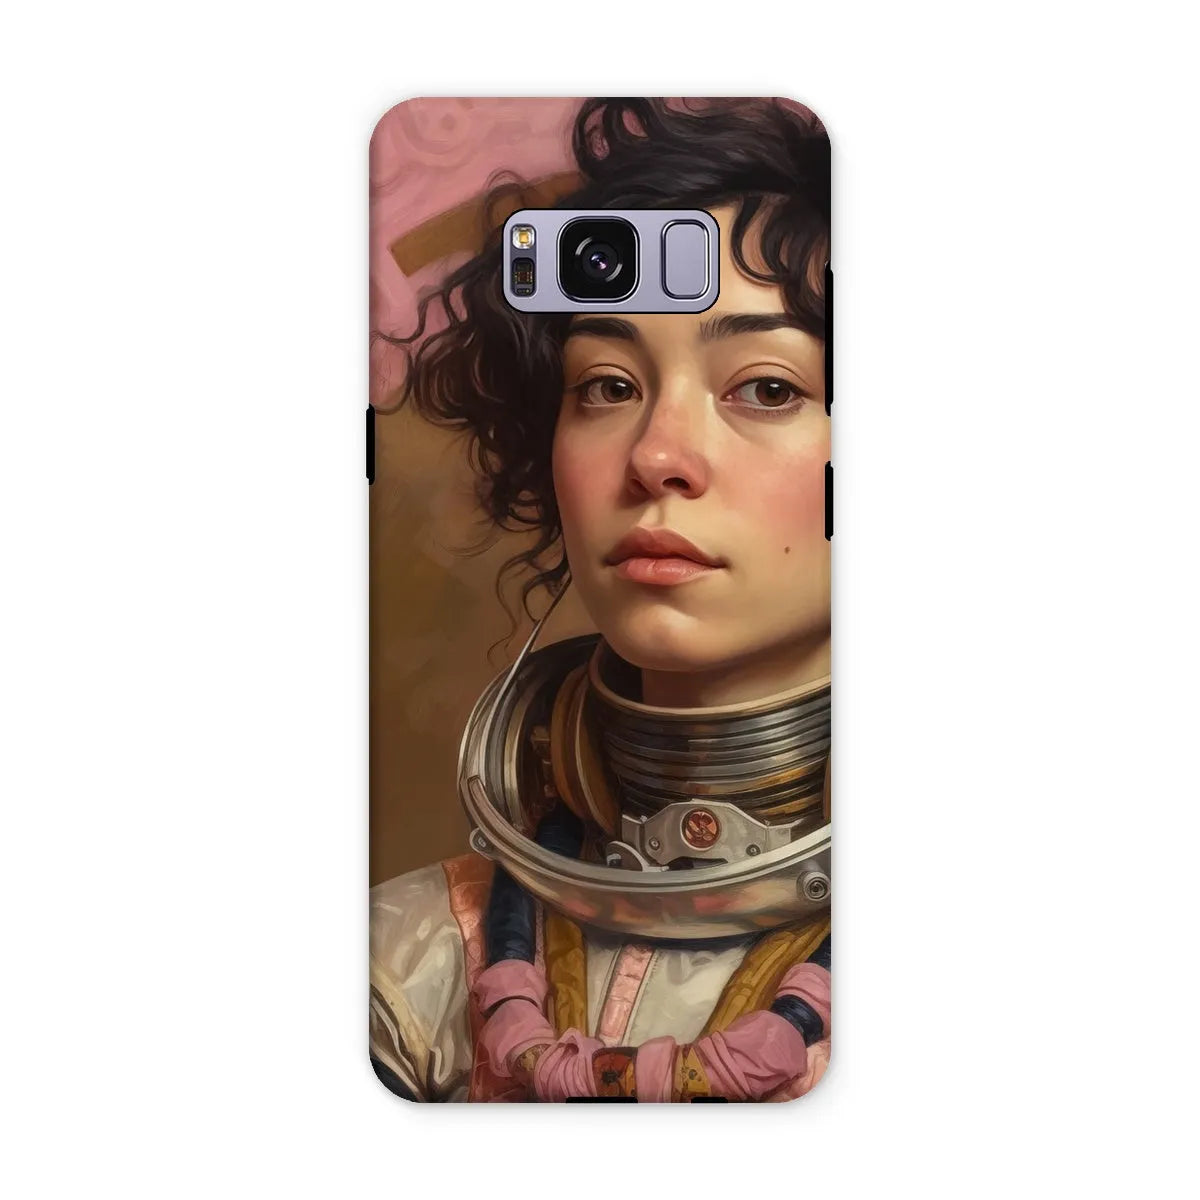 Faustina The Lesbian Astronaut - Lgbtq Art Phone Case - Samsung Galaxy S8 Plus / Matte - Mobile Phone Cases - Aesthetic